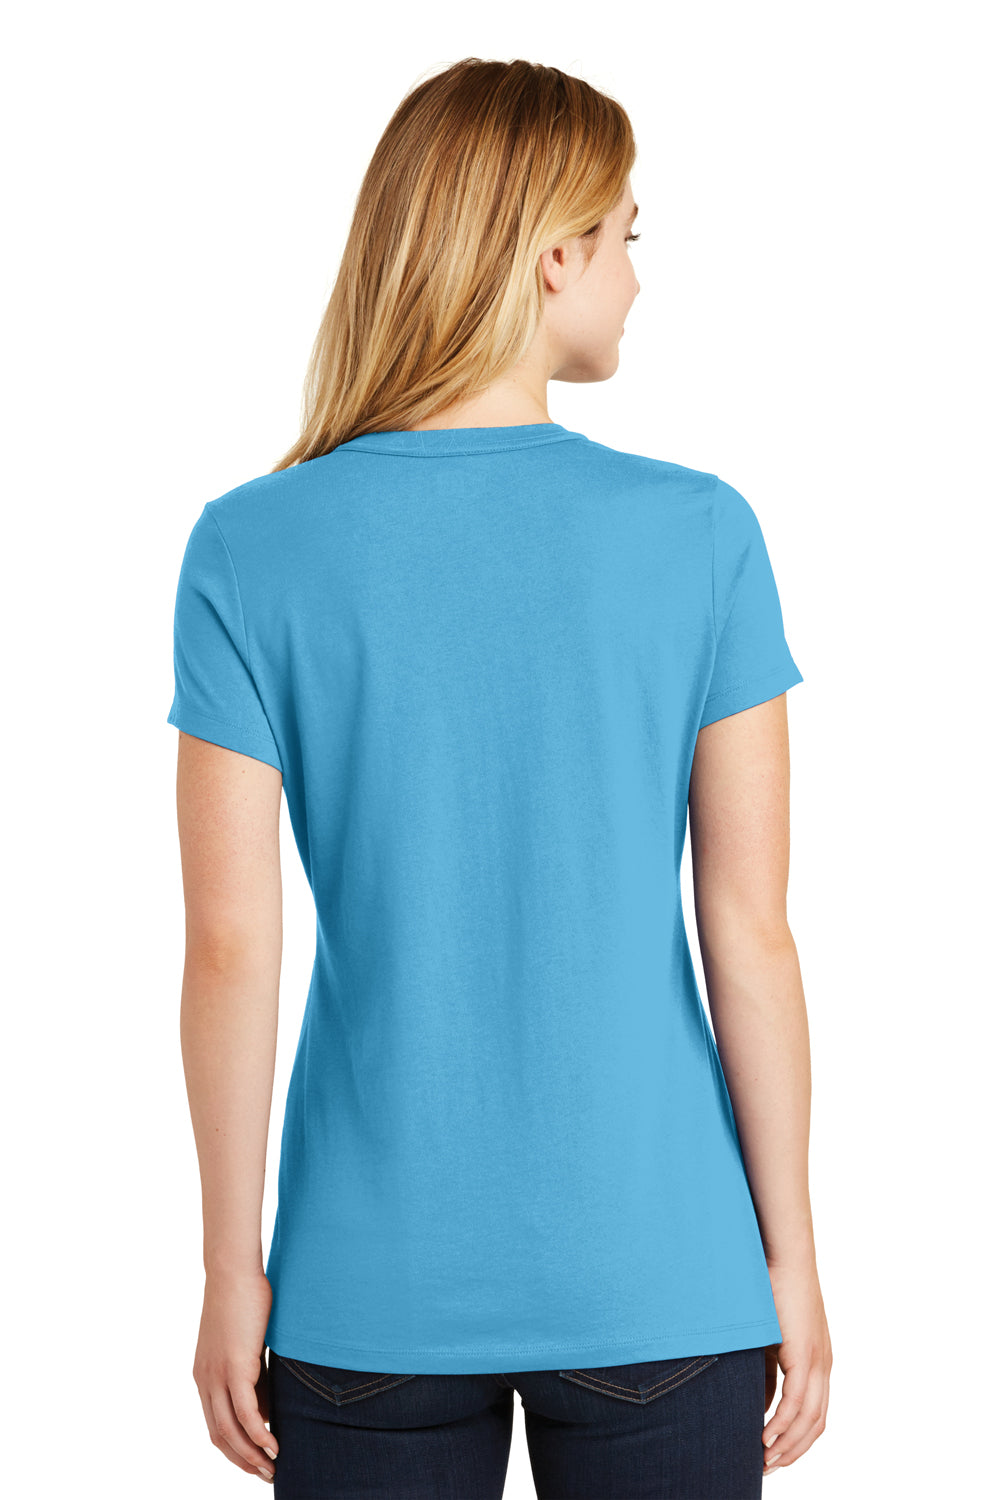 New Era LNEA100 Womens Heritage Short Sleeve Crewneck T-Shirt Sky Blue Back